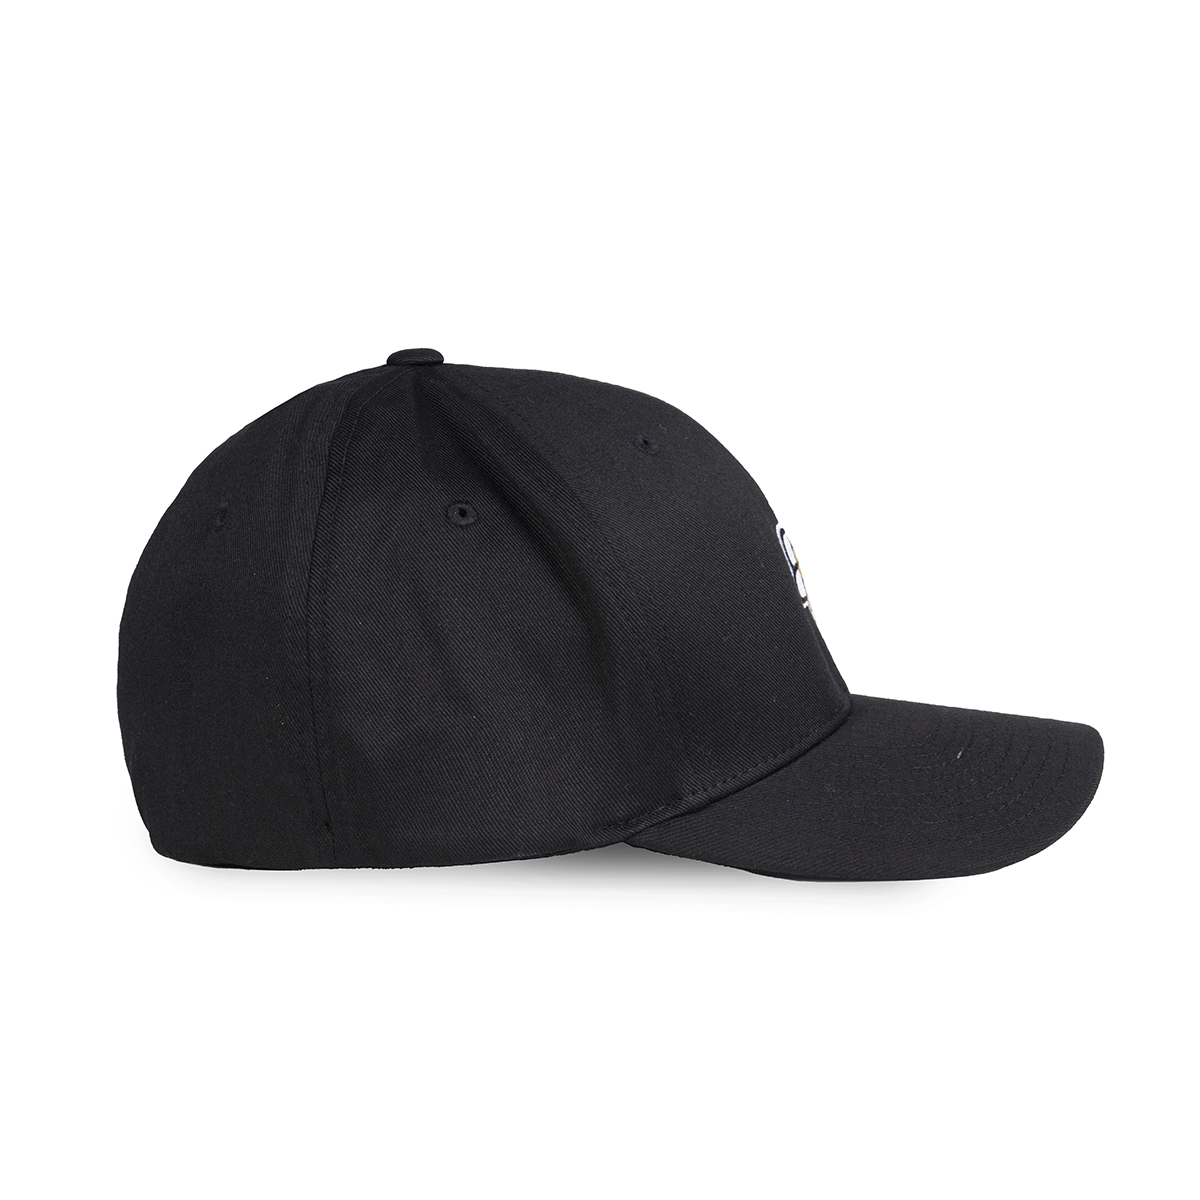 The Bee Flex Hat - Black